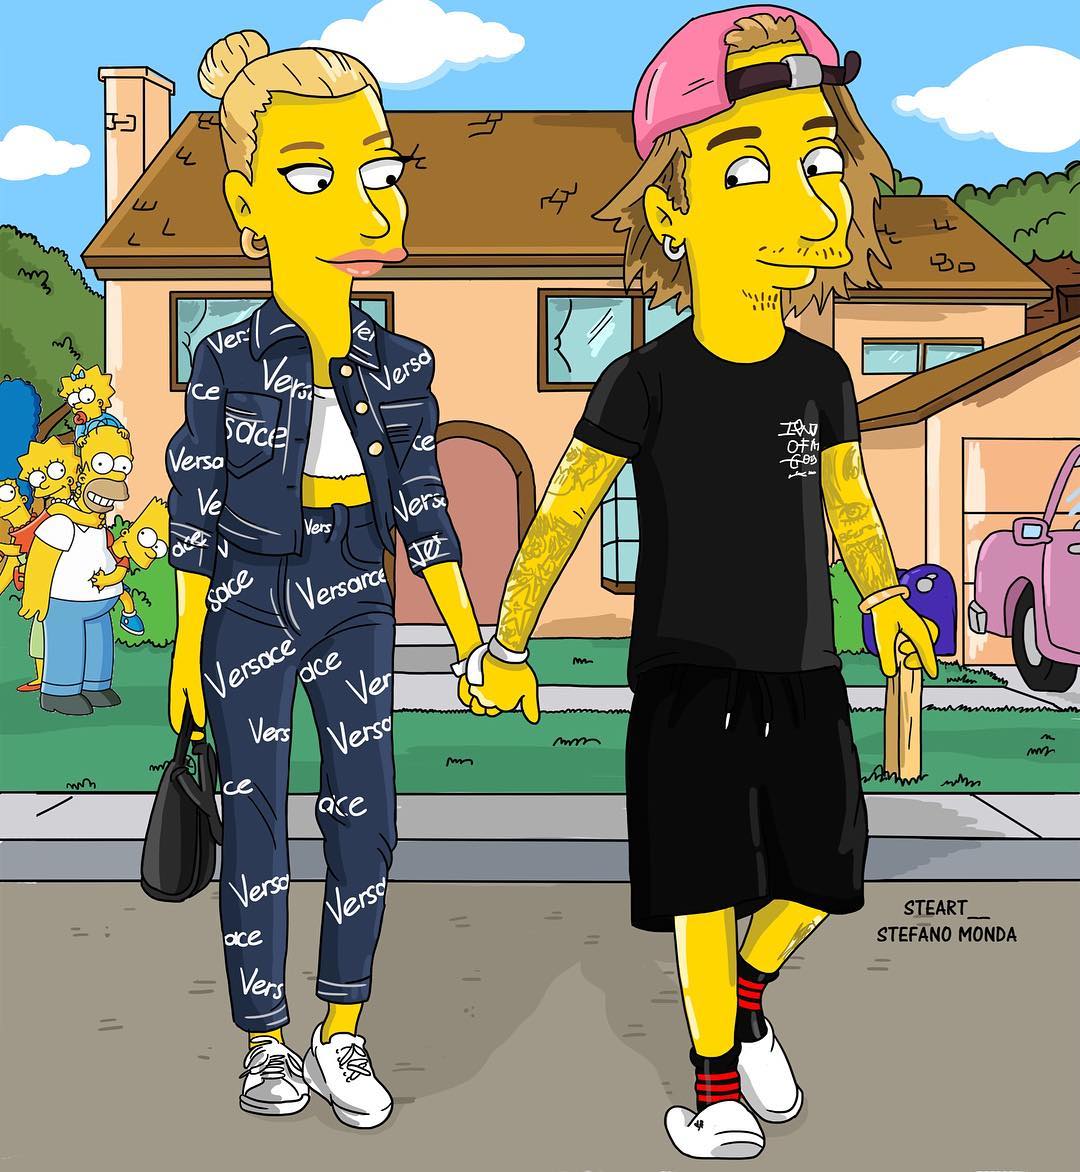 Джастин Бибер и Хейли Болдуин стали персонажами 'Симпсонов' - фото 165537